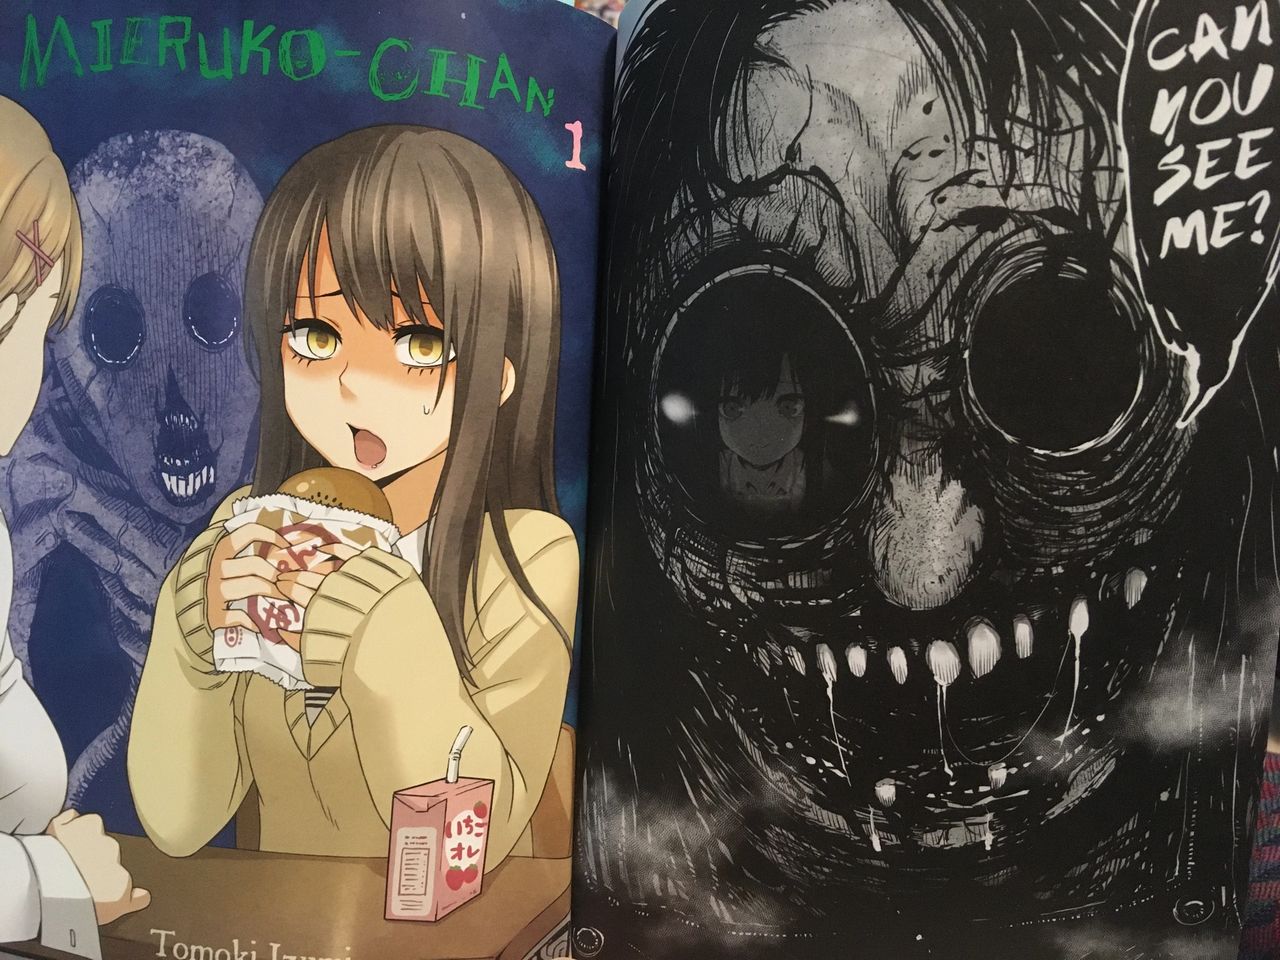 The Mieruko-chan Manga is a must-read!